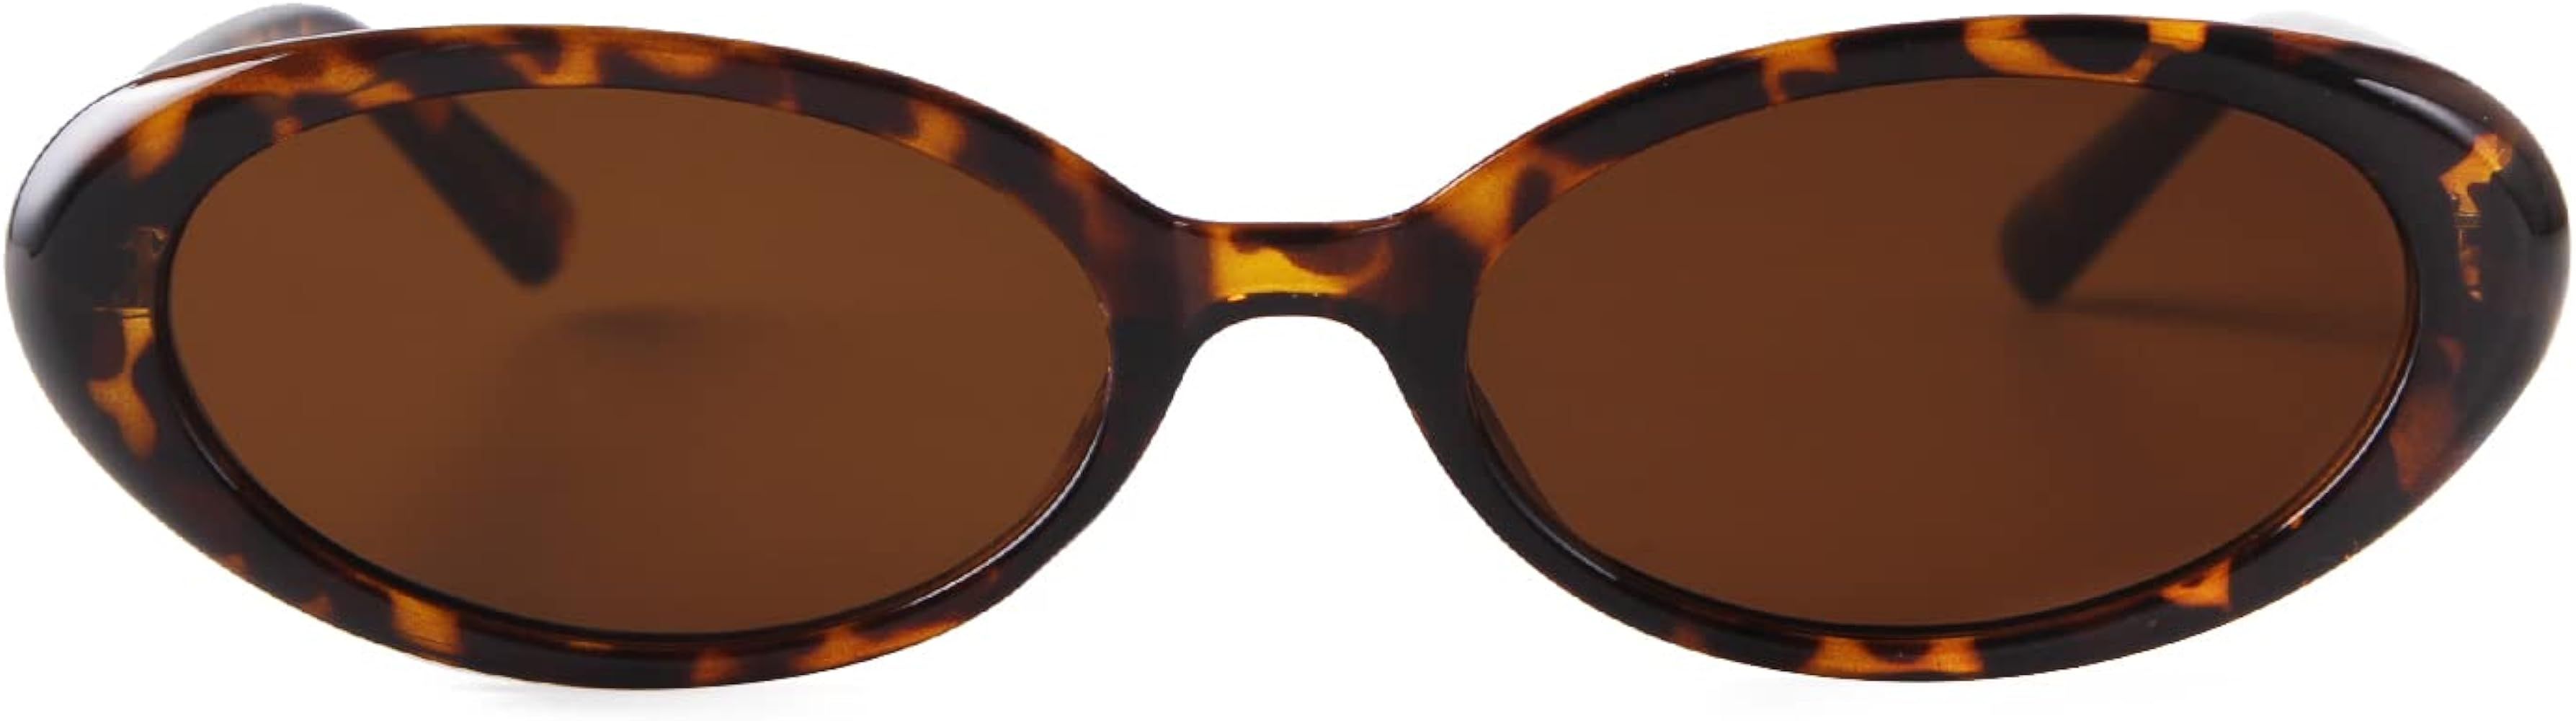 JUDOO Tiny Small 90s Sunglasses for Women Men Retro Oval Tinted Glasses | Amazon (US)